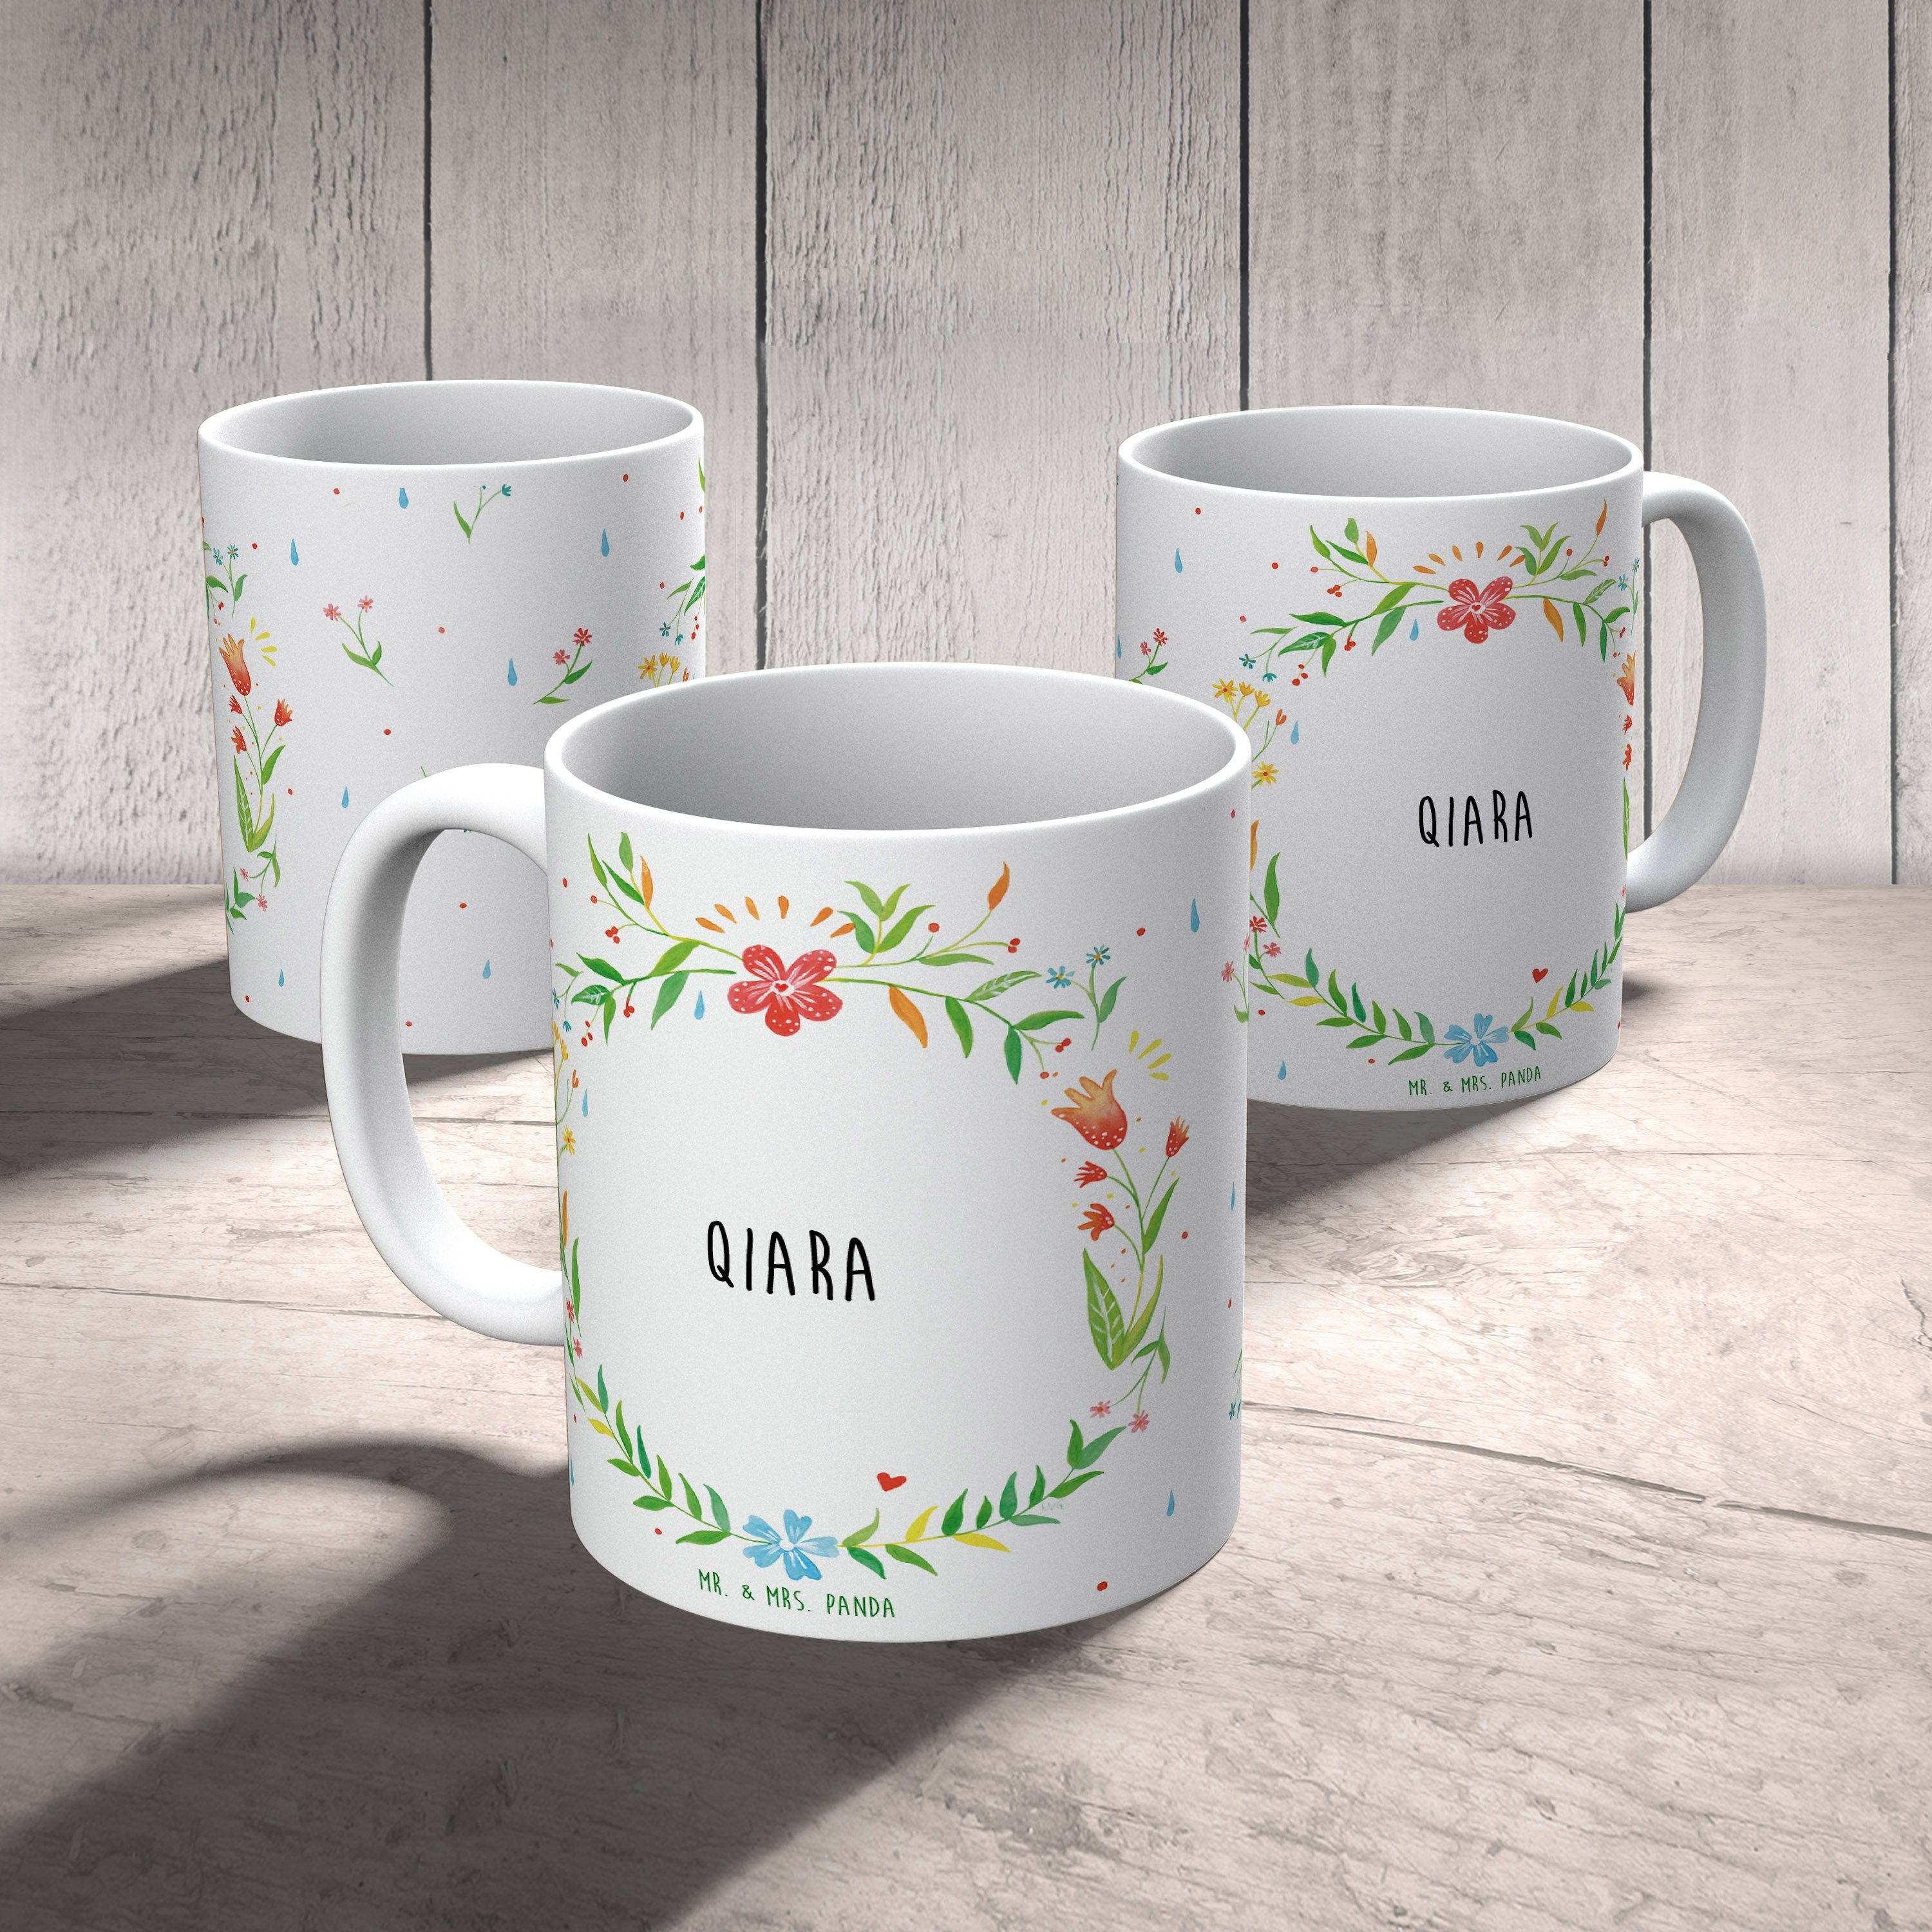 - Mrs. Qiara Tasse Tasse, Keramiktasse, Mr. & Büro Tee, Keramik Geschenk, Kaffeebecher, Panda Becher,